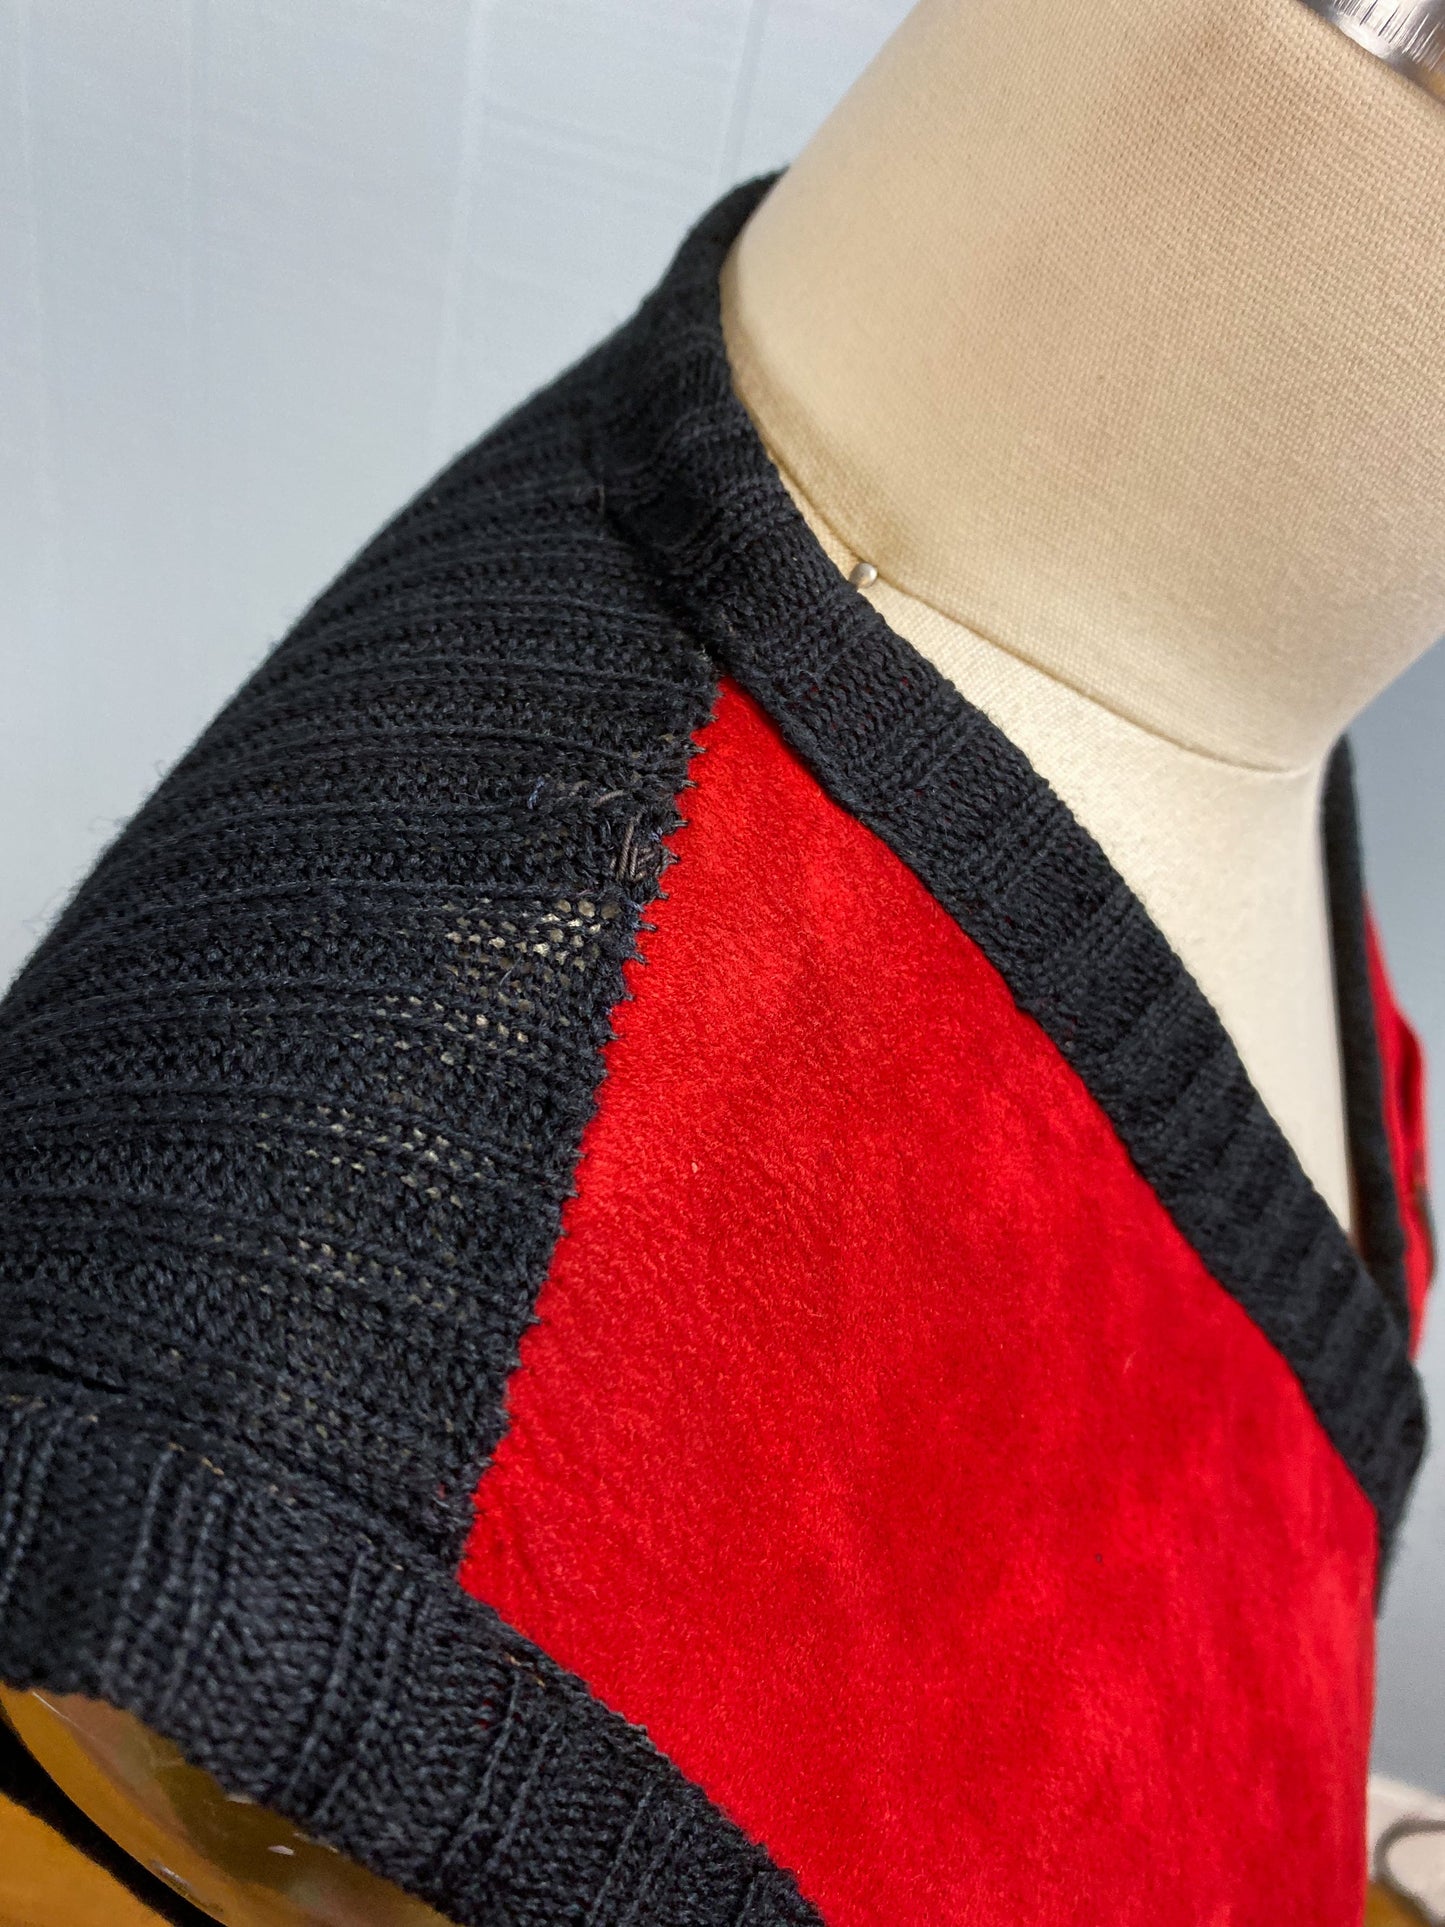 60's 70's Red Suede & Black Sweater Ribbed V Neck Vest | S/M